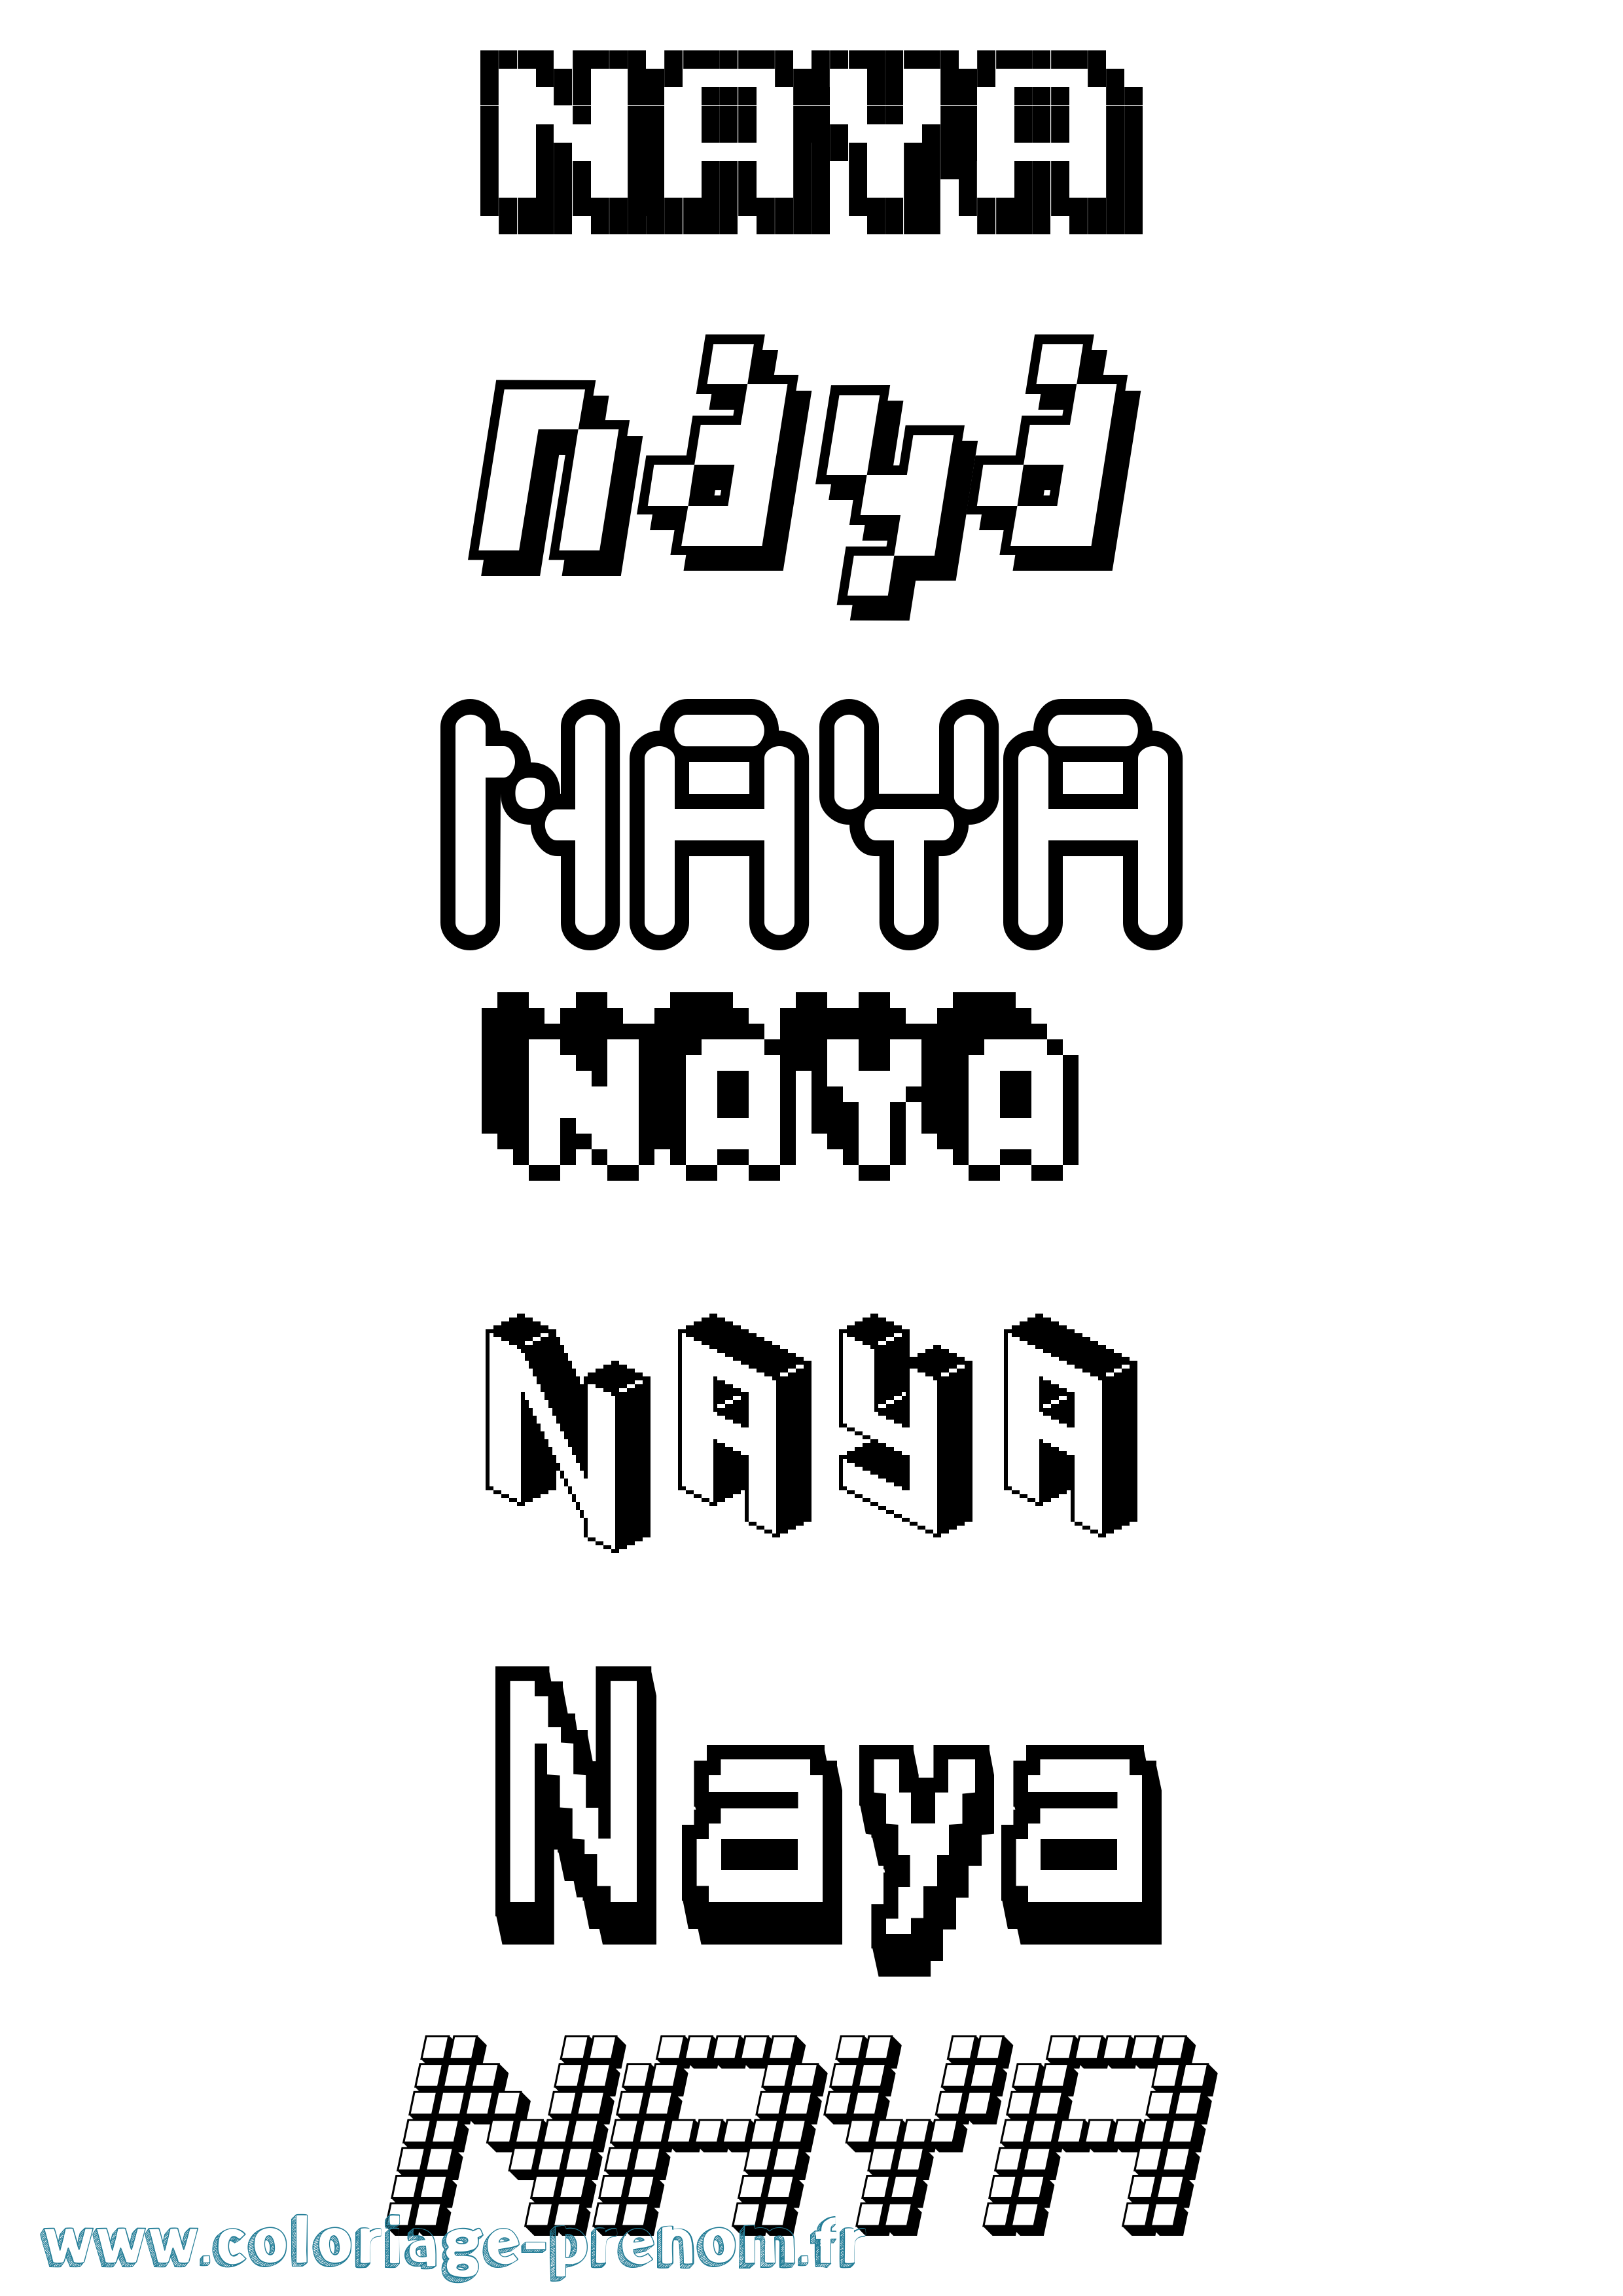 Coloriage prénom Naya